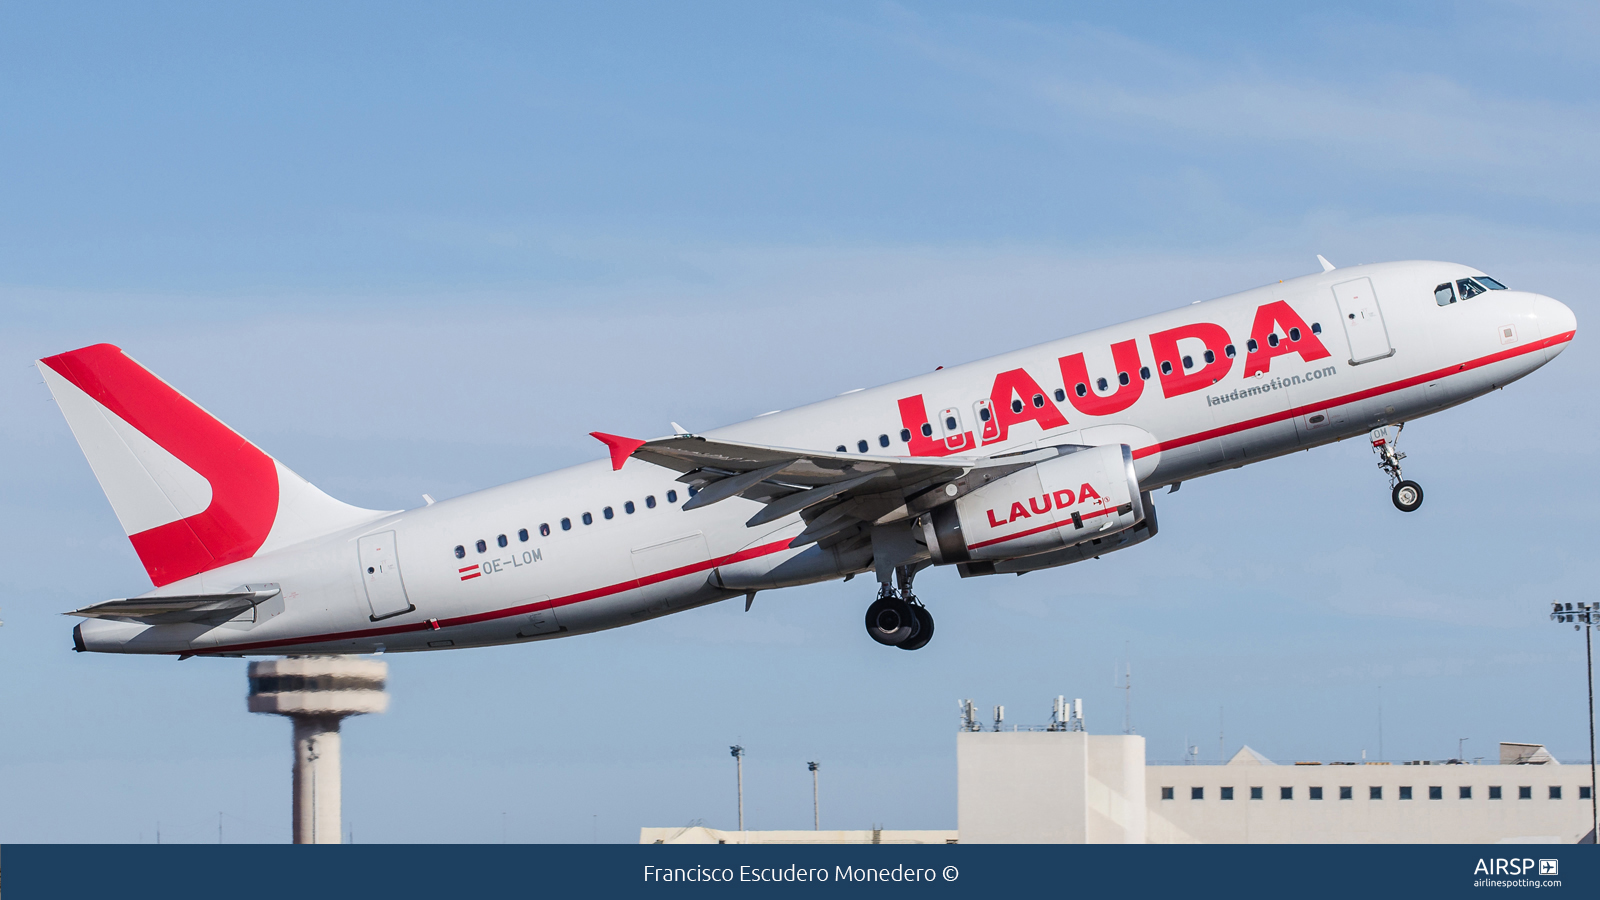 Laudamotion  Airbus A320  OE-LOM